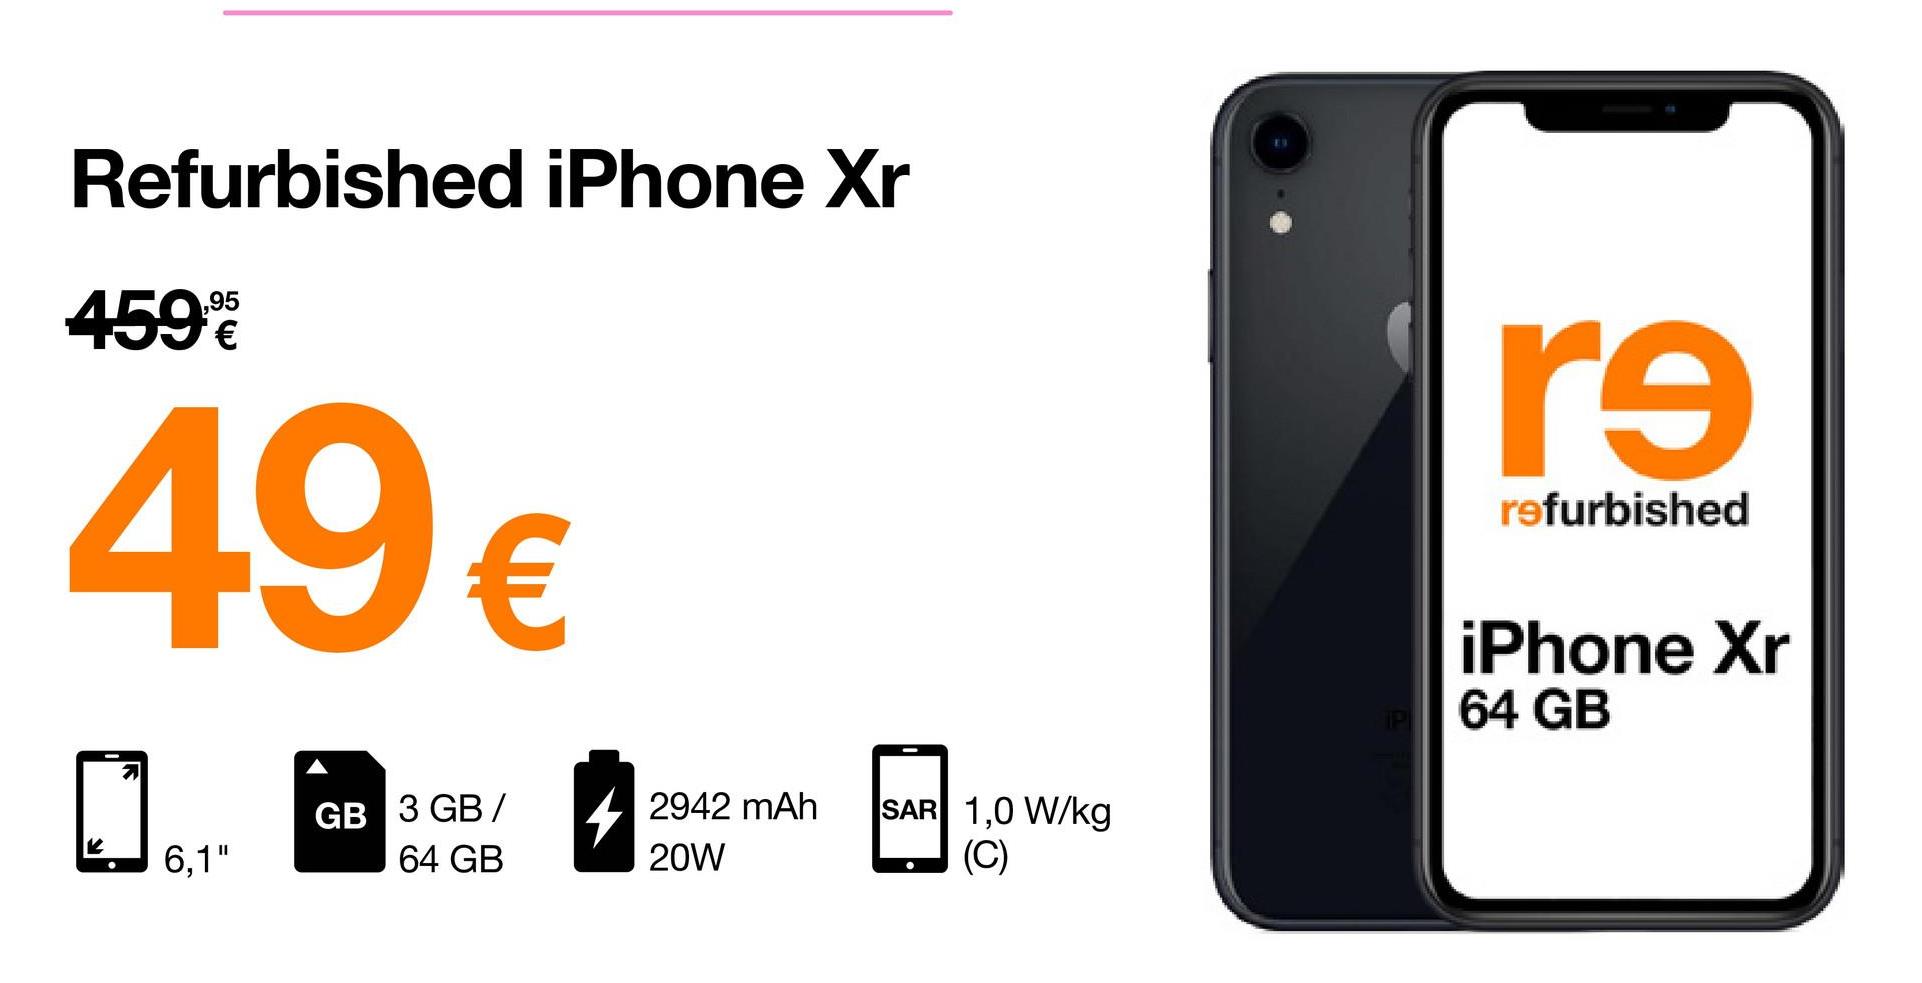 Refurbished iPhone Xr
459%
49 €
GB 3 GB/
6,1"
64 GB
2942 mAh
20W
SAR 1,0 W/kg
(C)
IP
r9
refurbished
iPhone Xr
64 GB